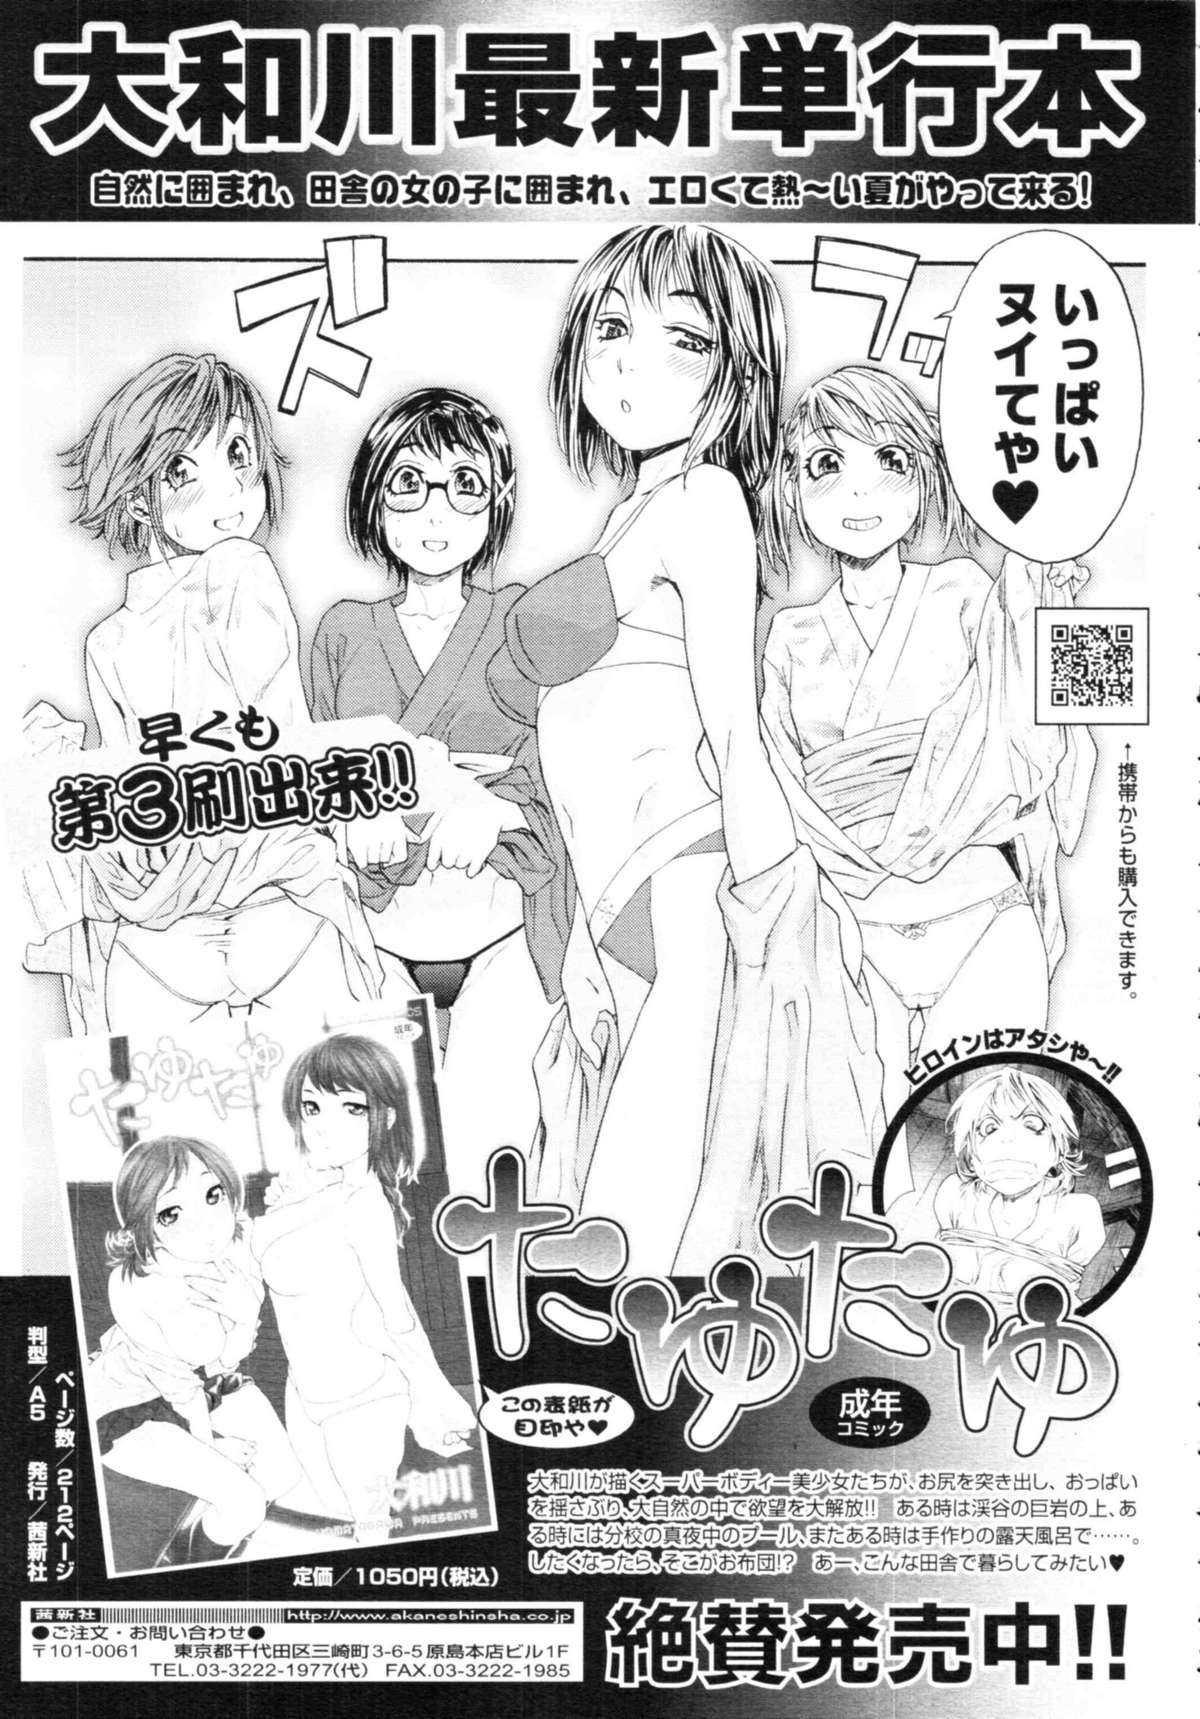 COMIC Tenma 2009-09 Vol. 136 COMIC天魔 コミックテンマ 2009年9月号 VOL.136